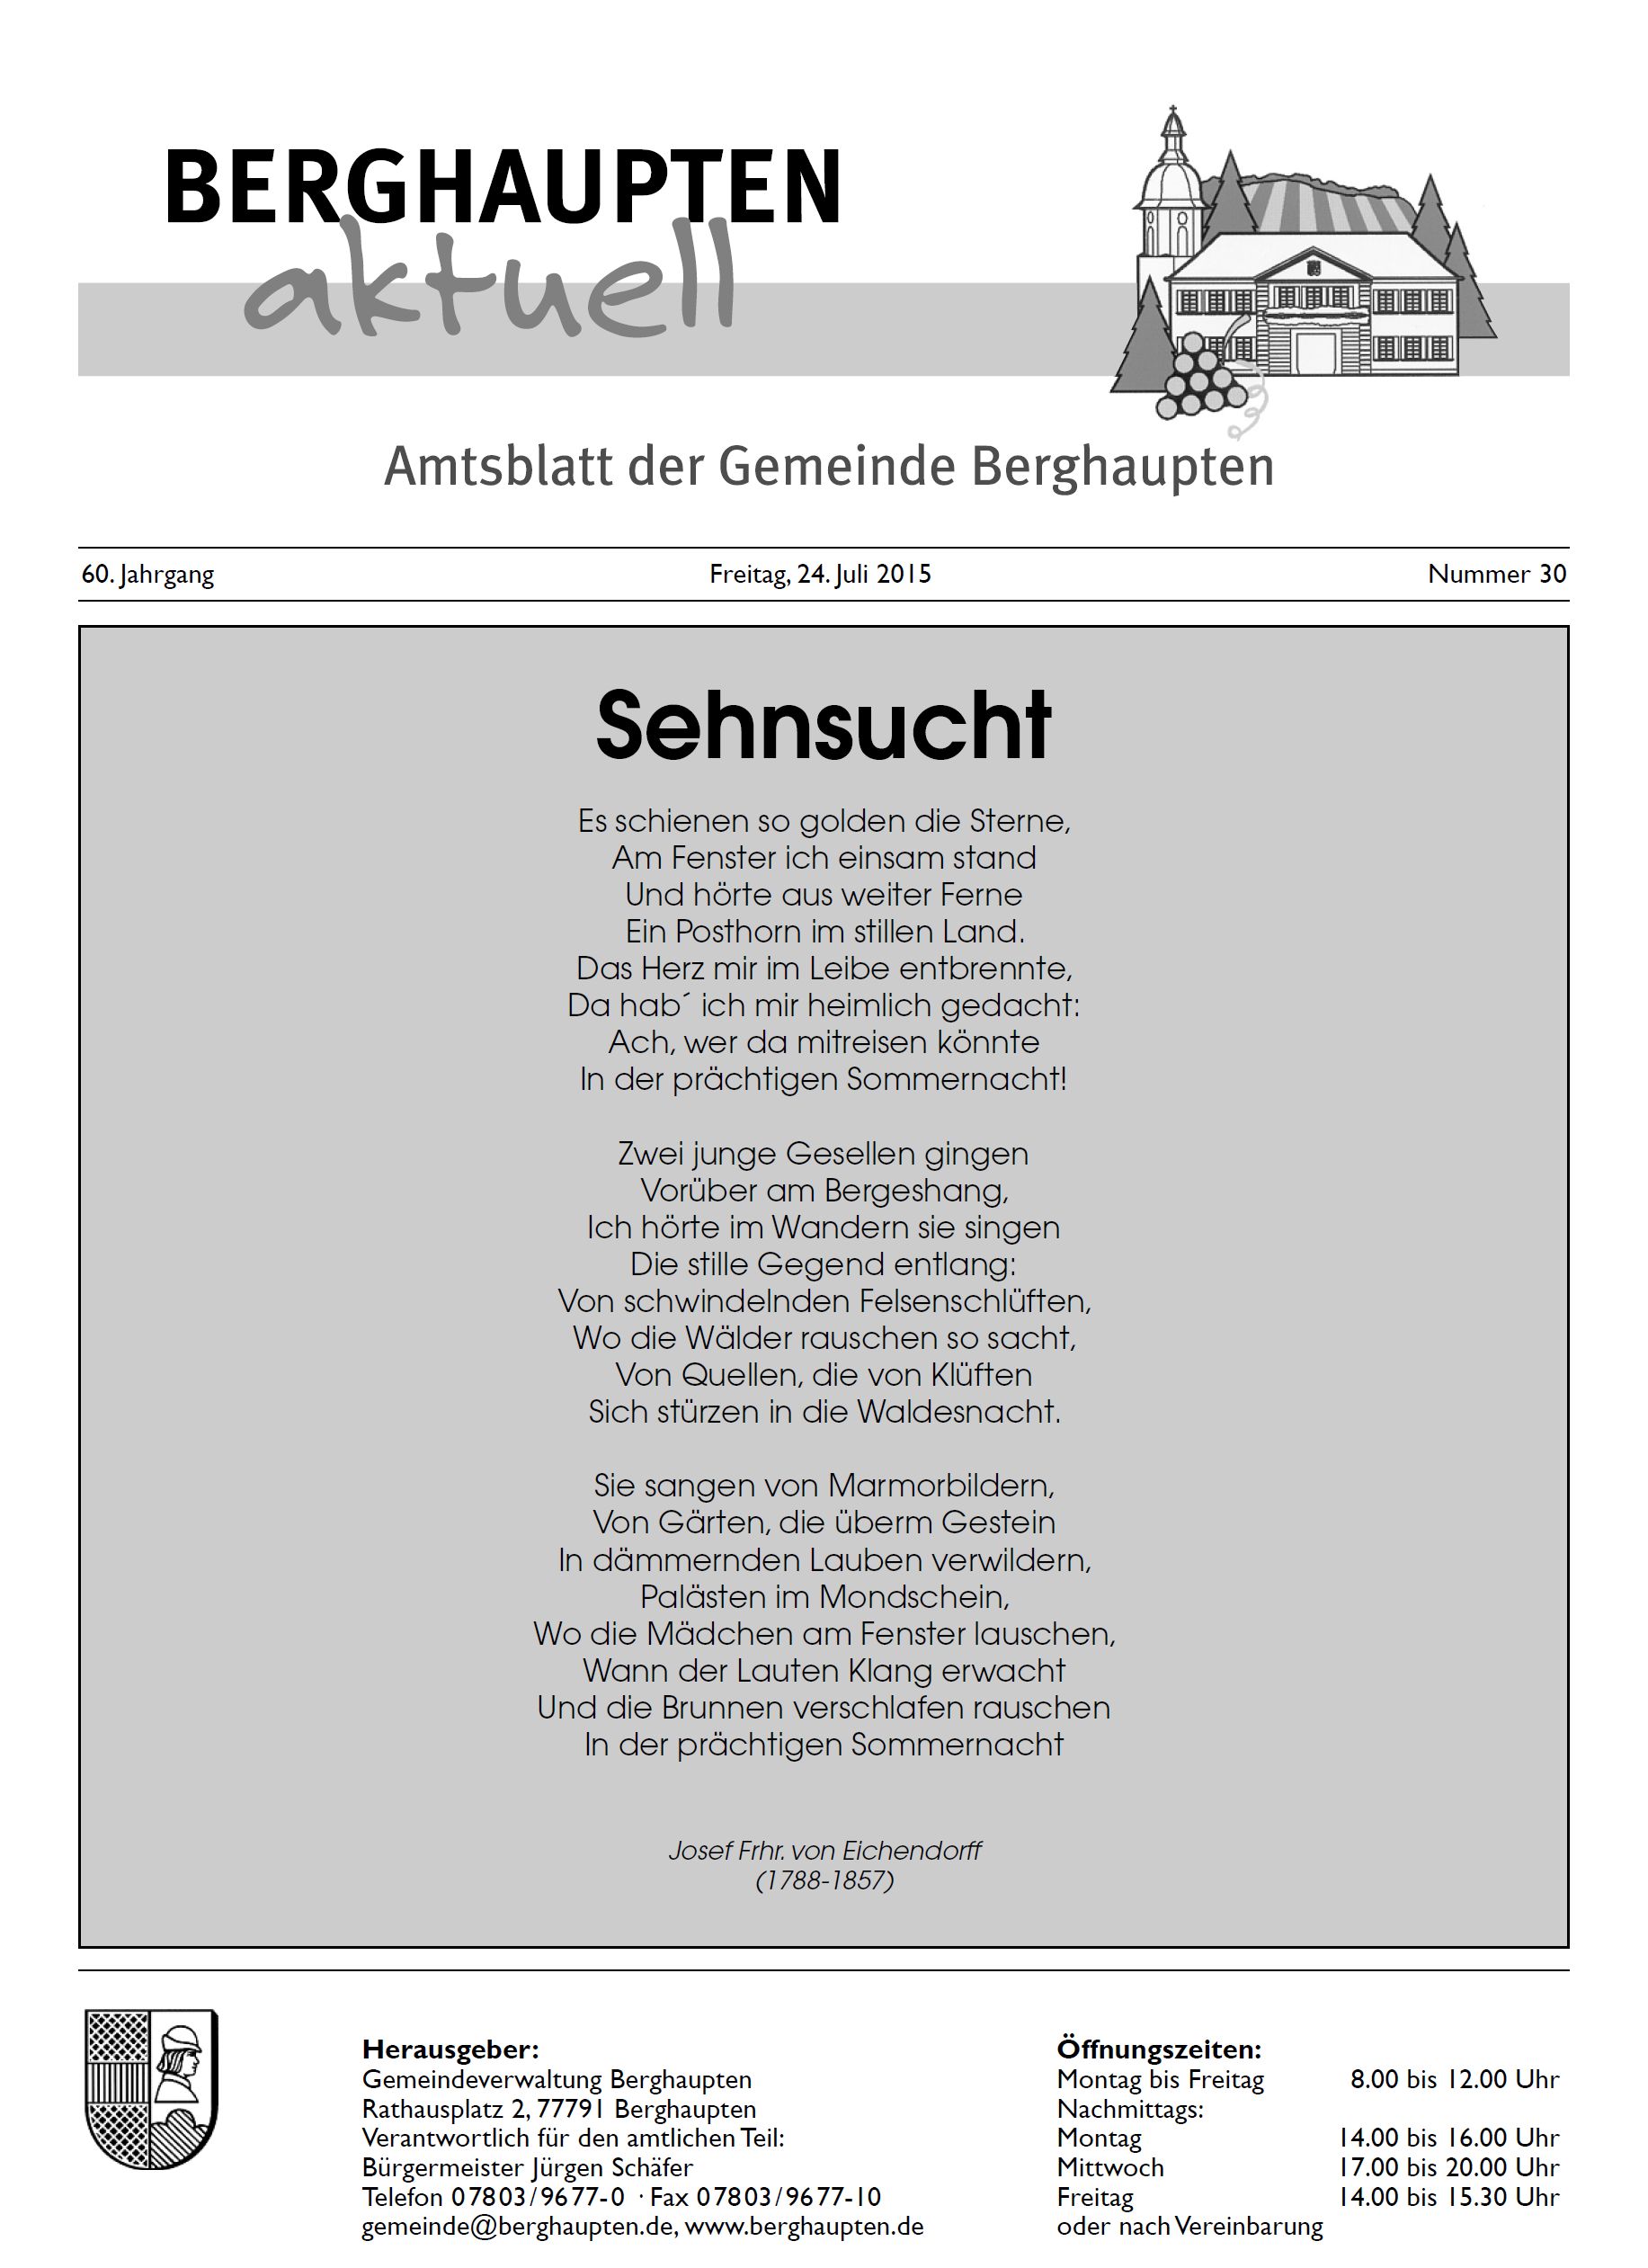 Amtsblatt 2015 KW 30